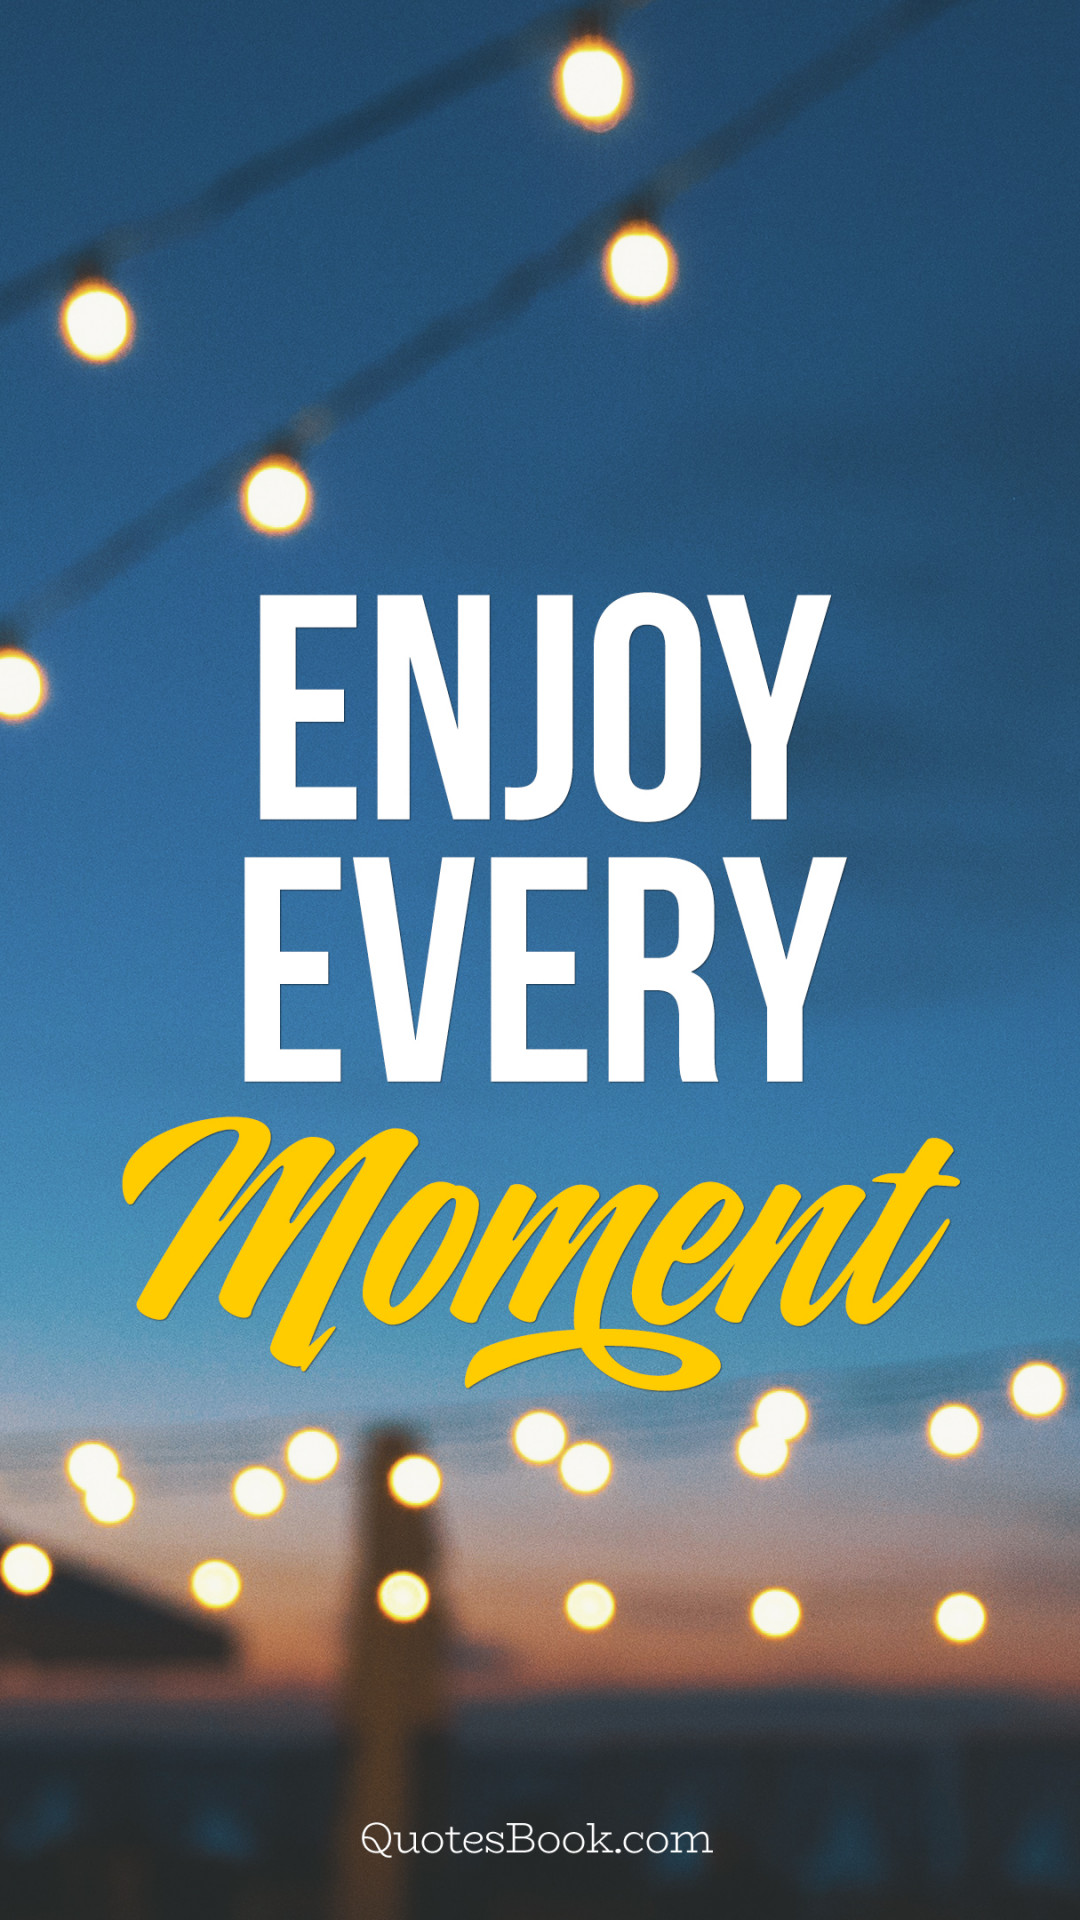 enjoy every moment 1080x1920 1445